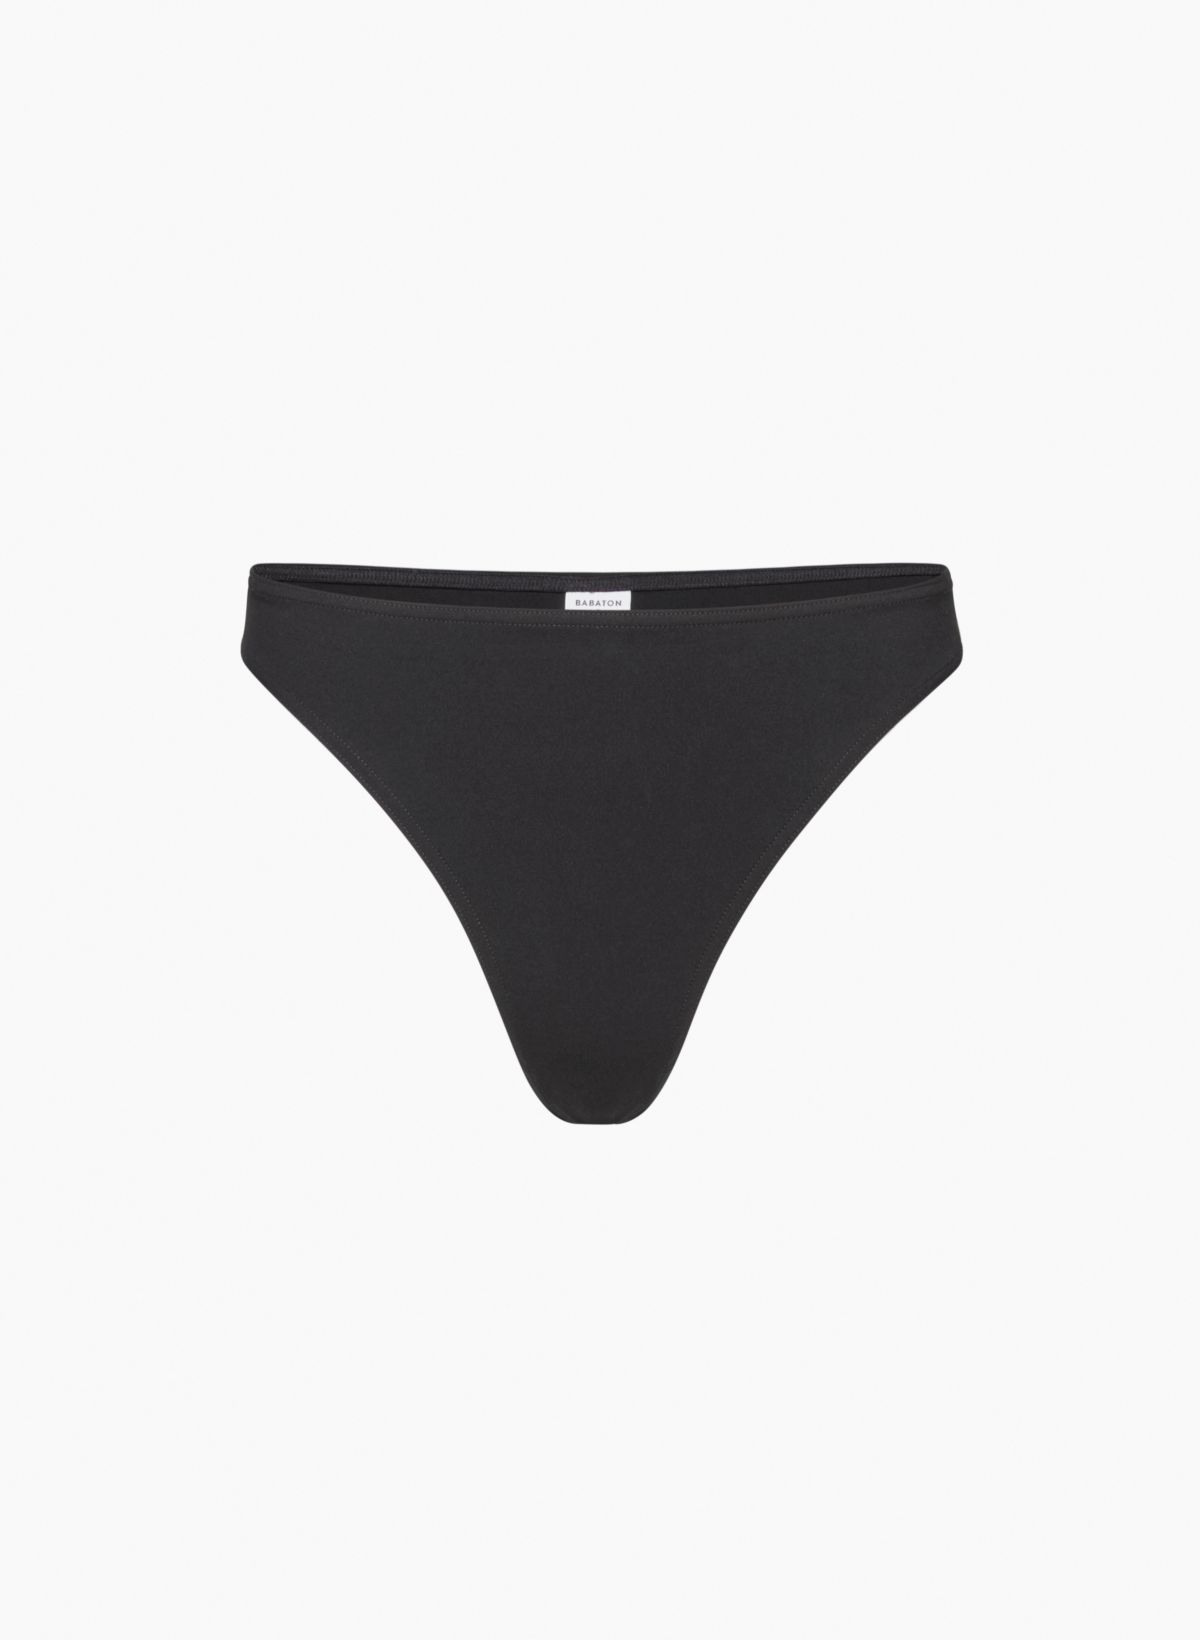 NEW Black Bow Super Stretch Bikini Underwear | XL | 16-18